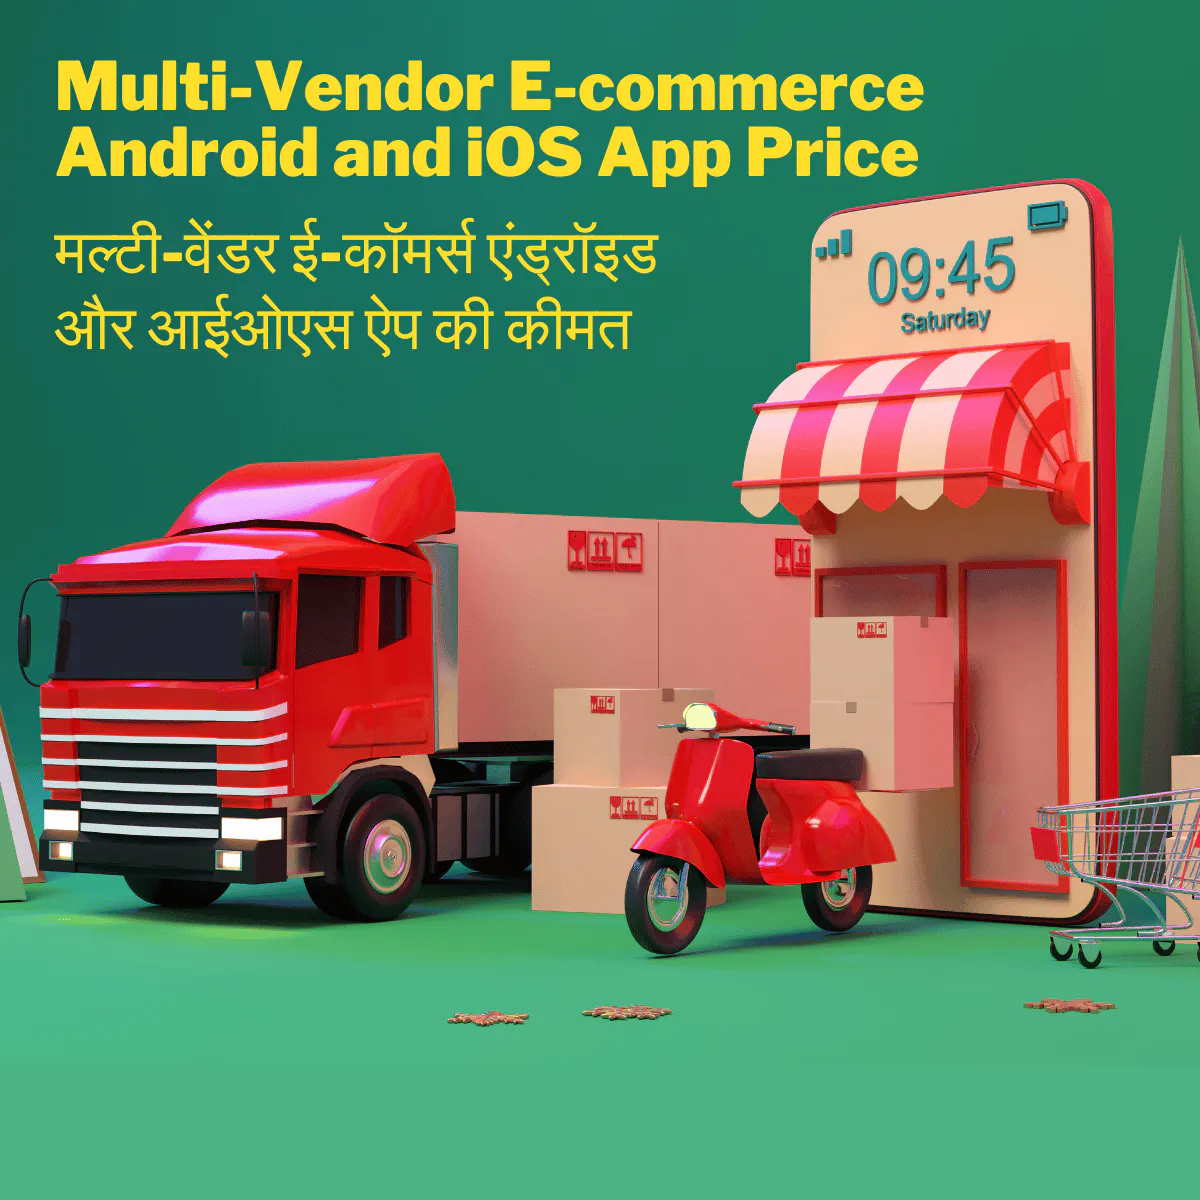 Multi-Vendor E-commerce Android and iOS App